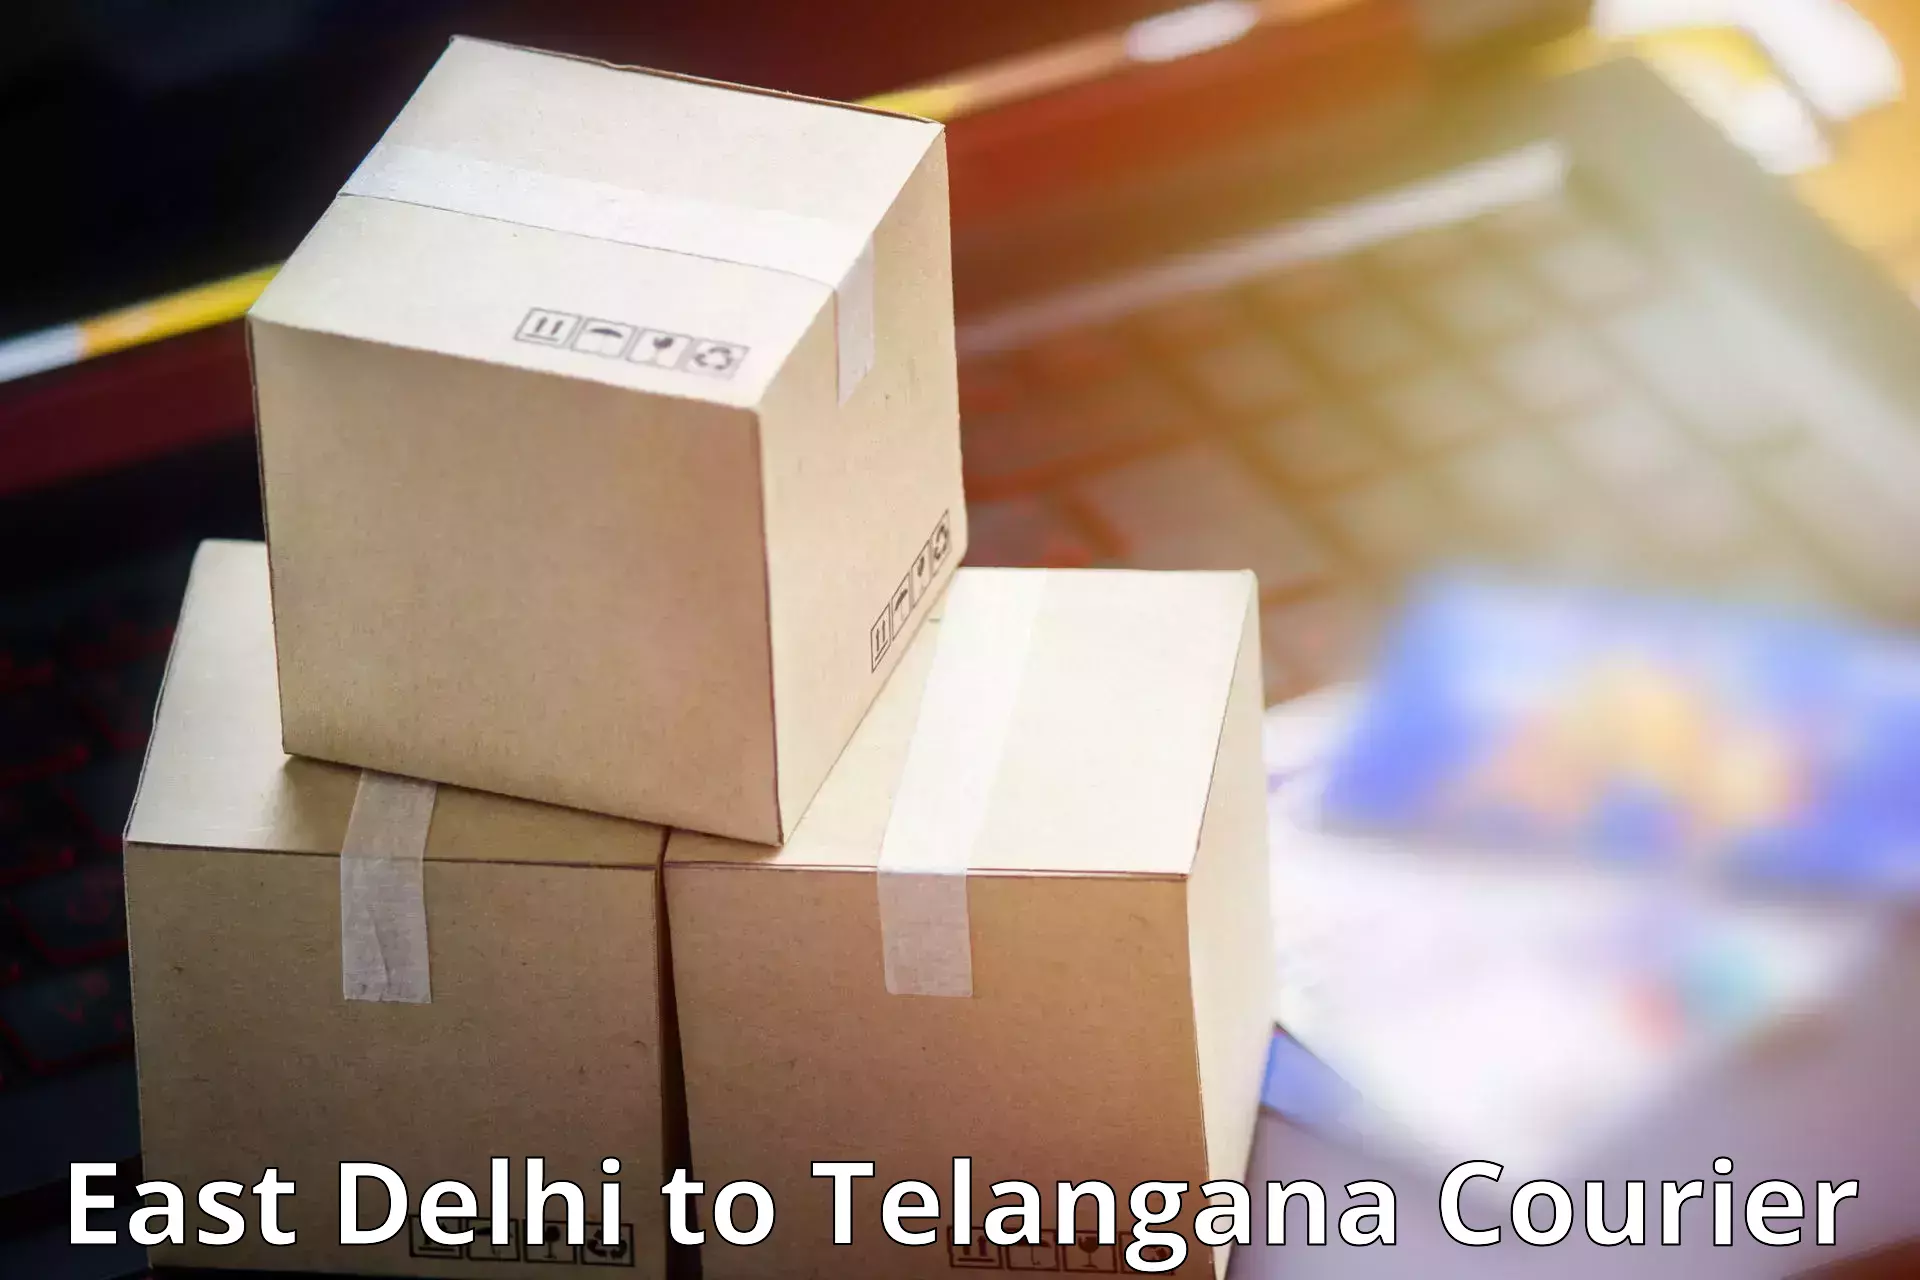 High-capacity parcel service East Delhi to Kallur